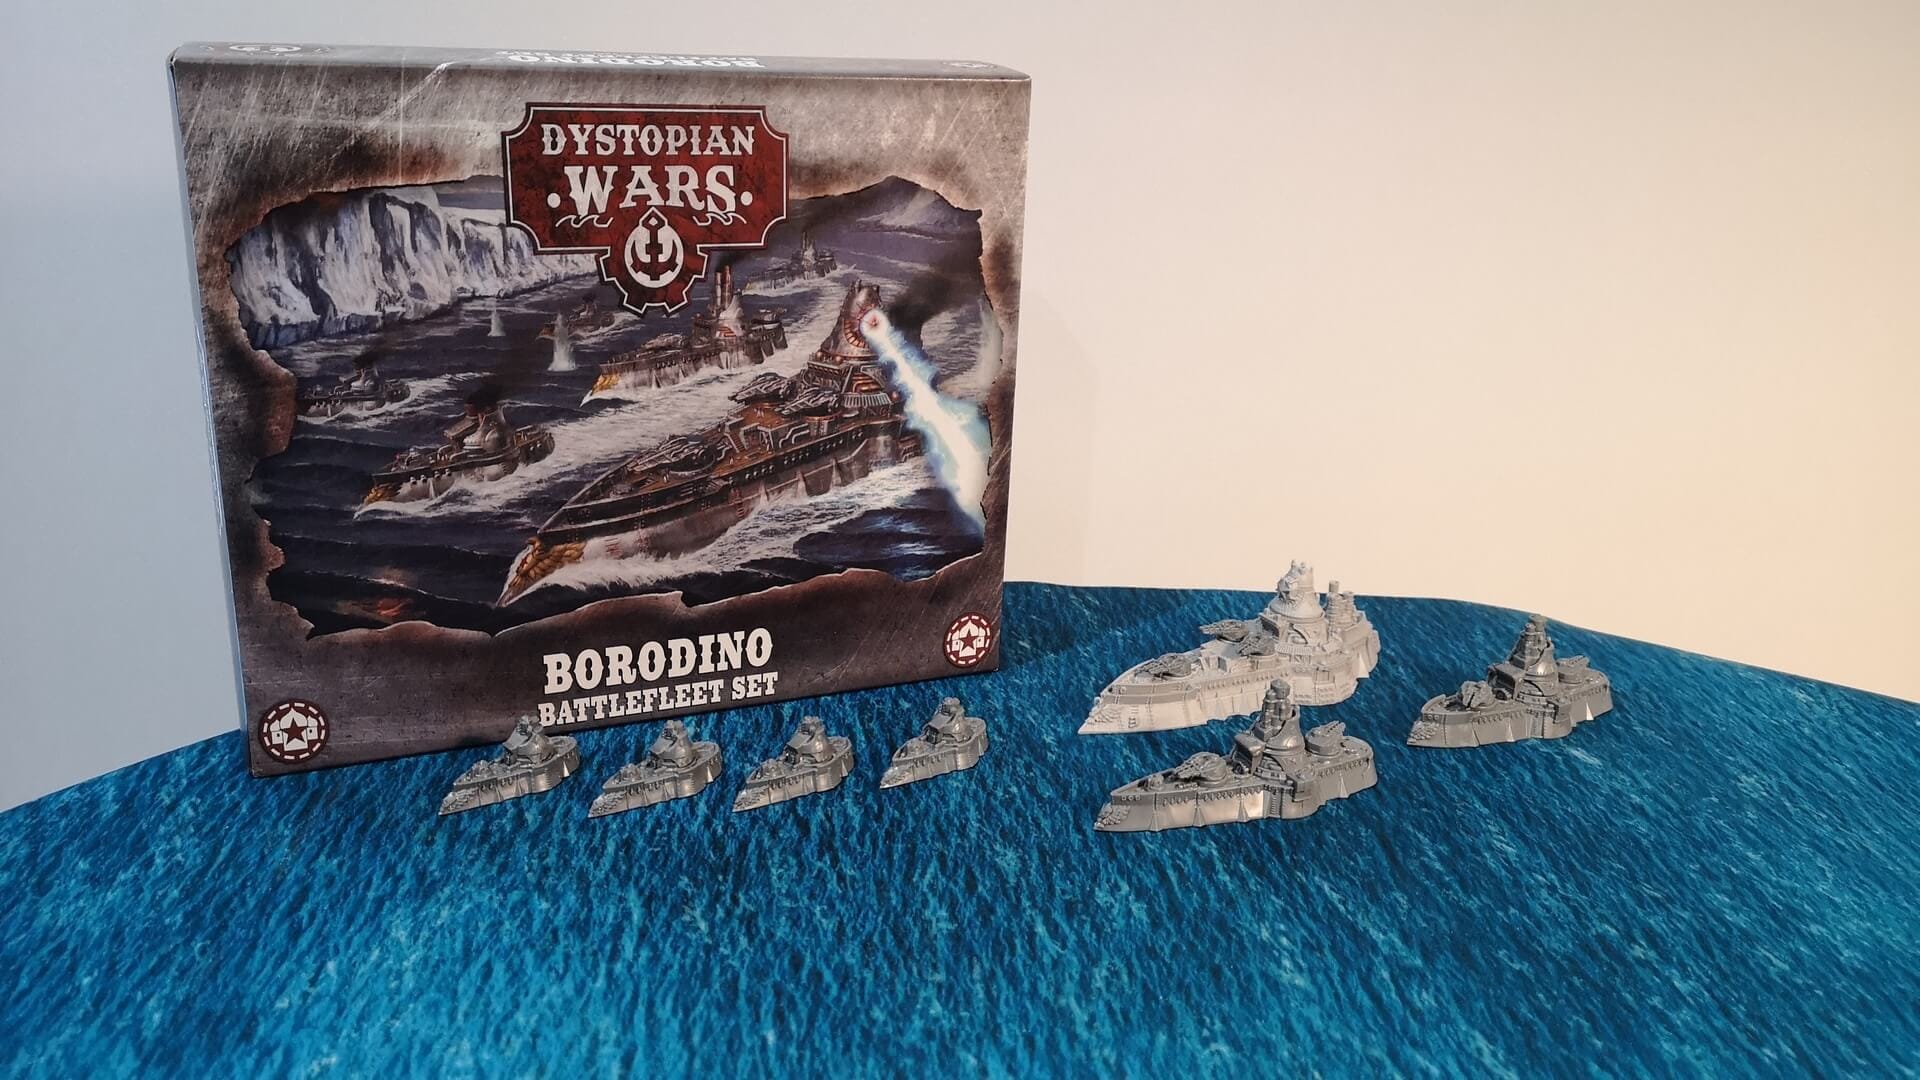 Dystopian Wars Borodino Battlefleet.